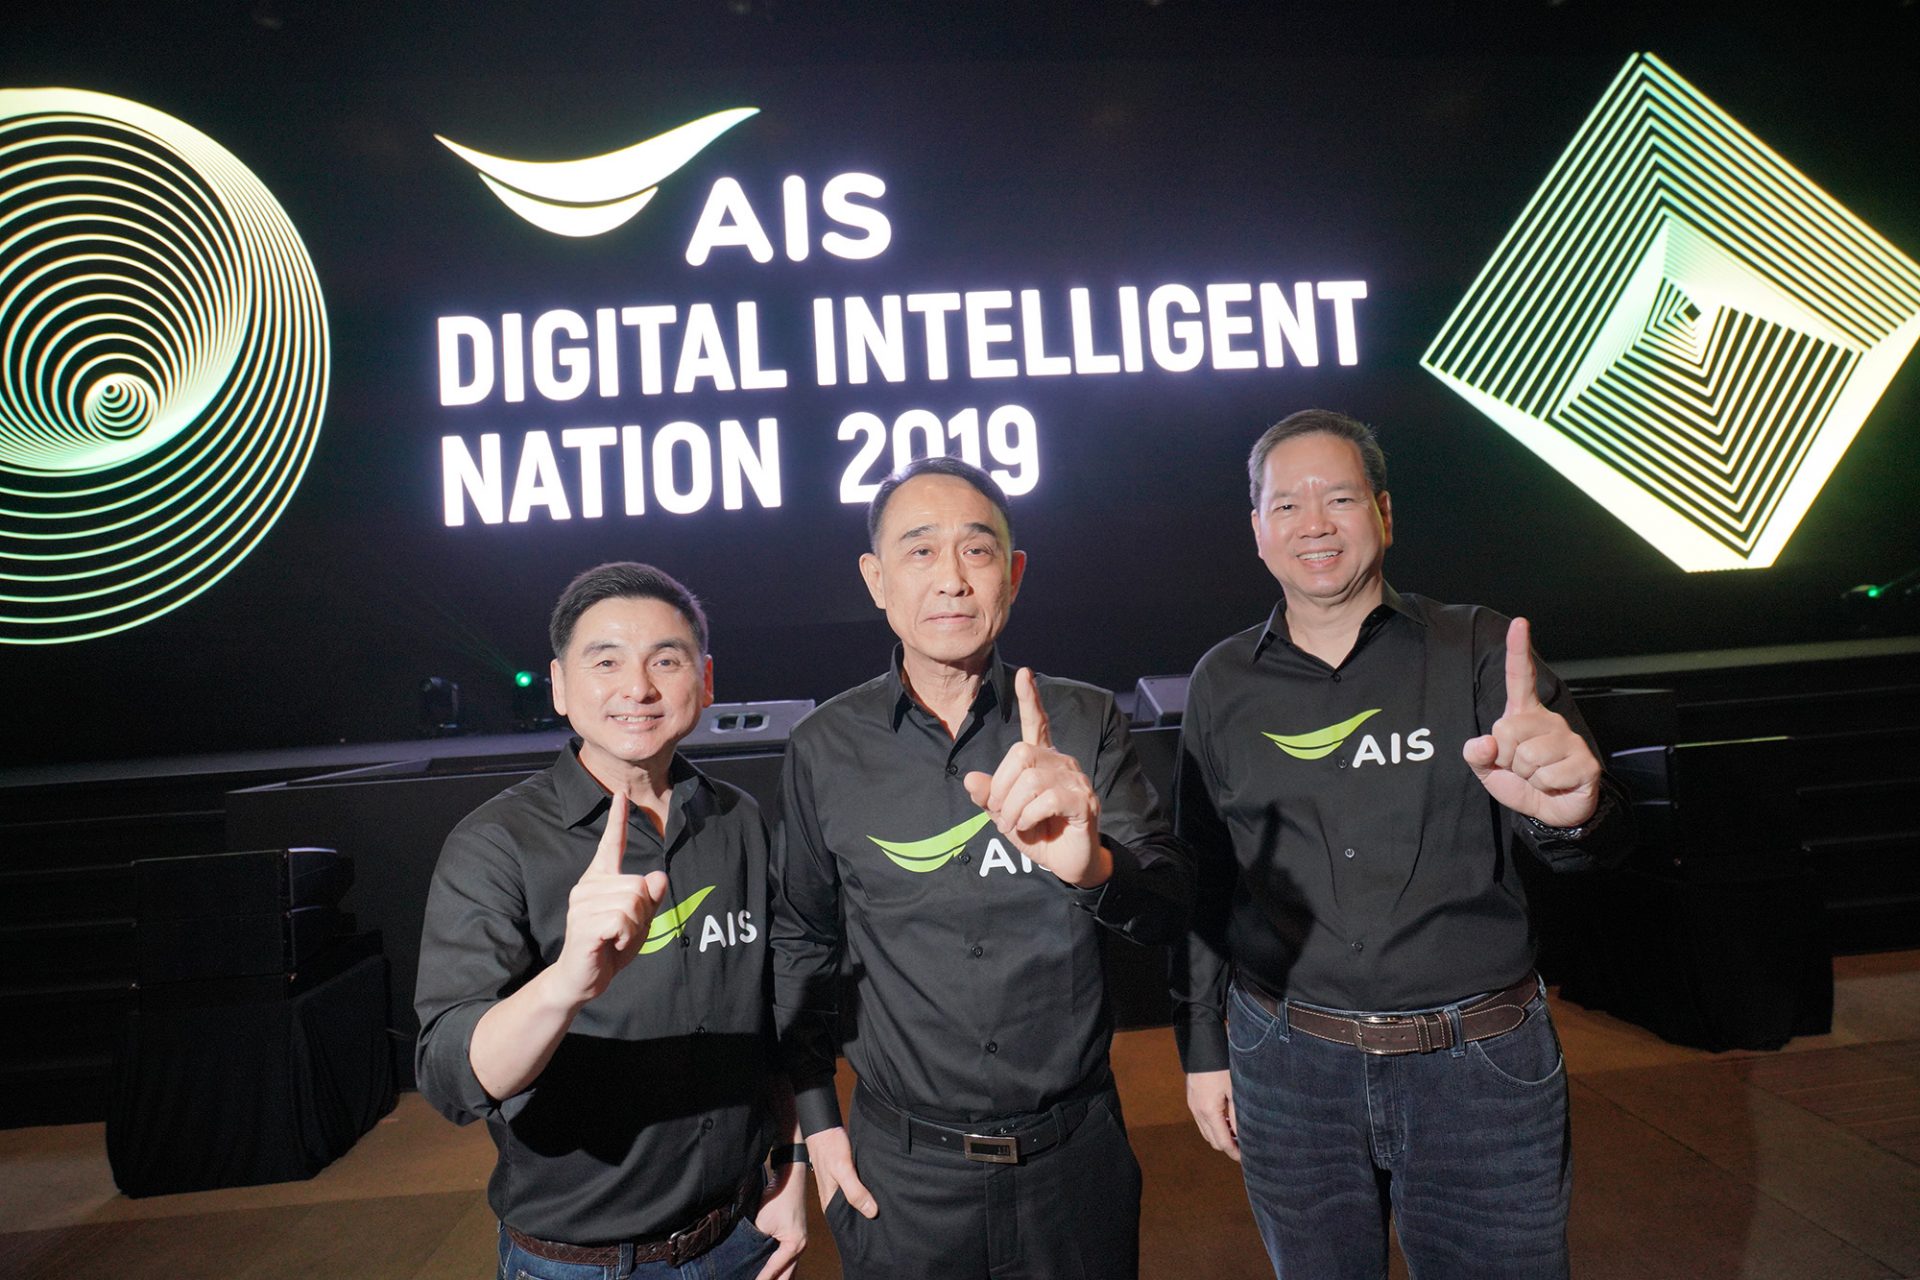 AIS โชว์ Wifi 6 ความเร็ว 4.8 Gb พร้อมสโตร์ไร้คนกลางงาน AIS Digital Intelligent Nation 2019!